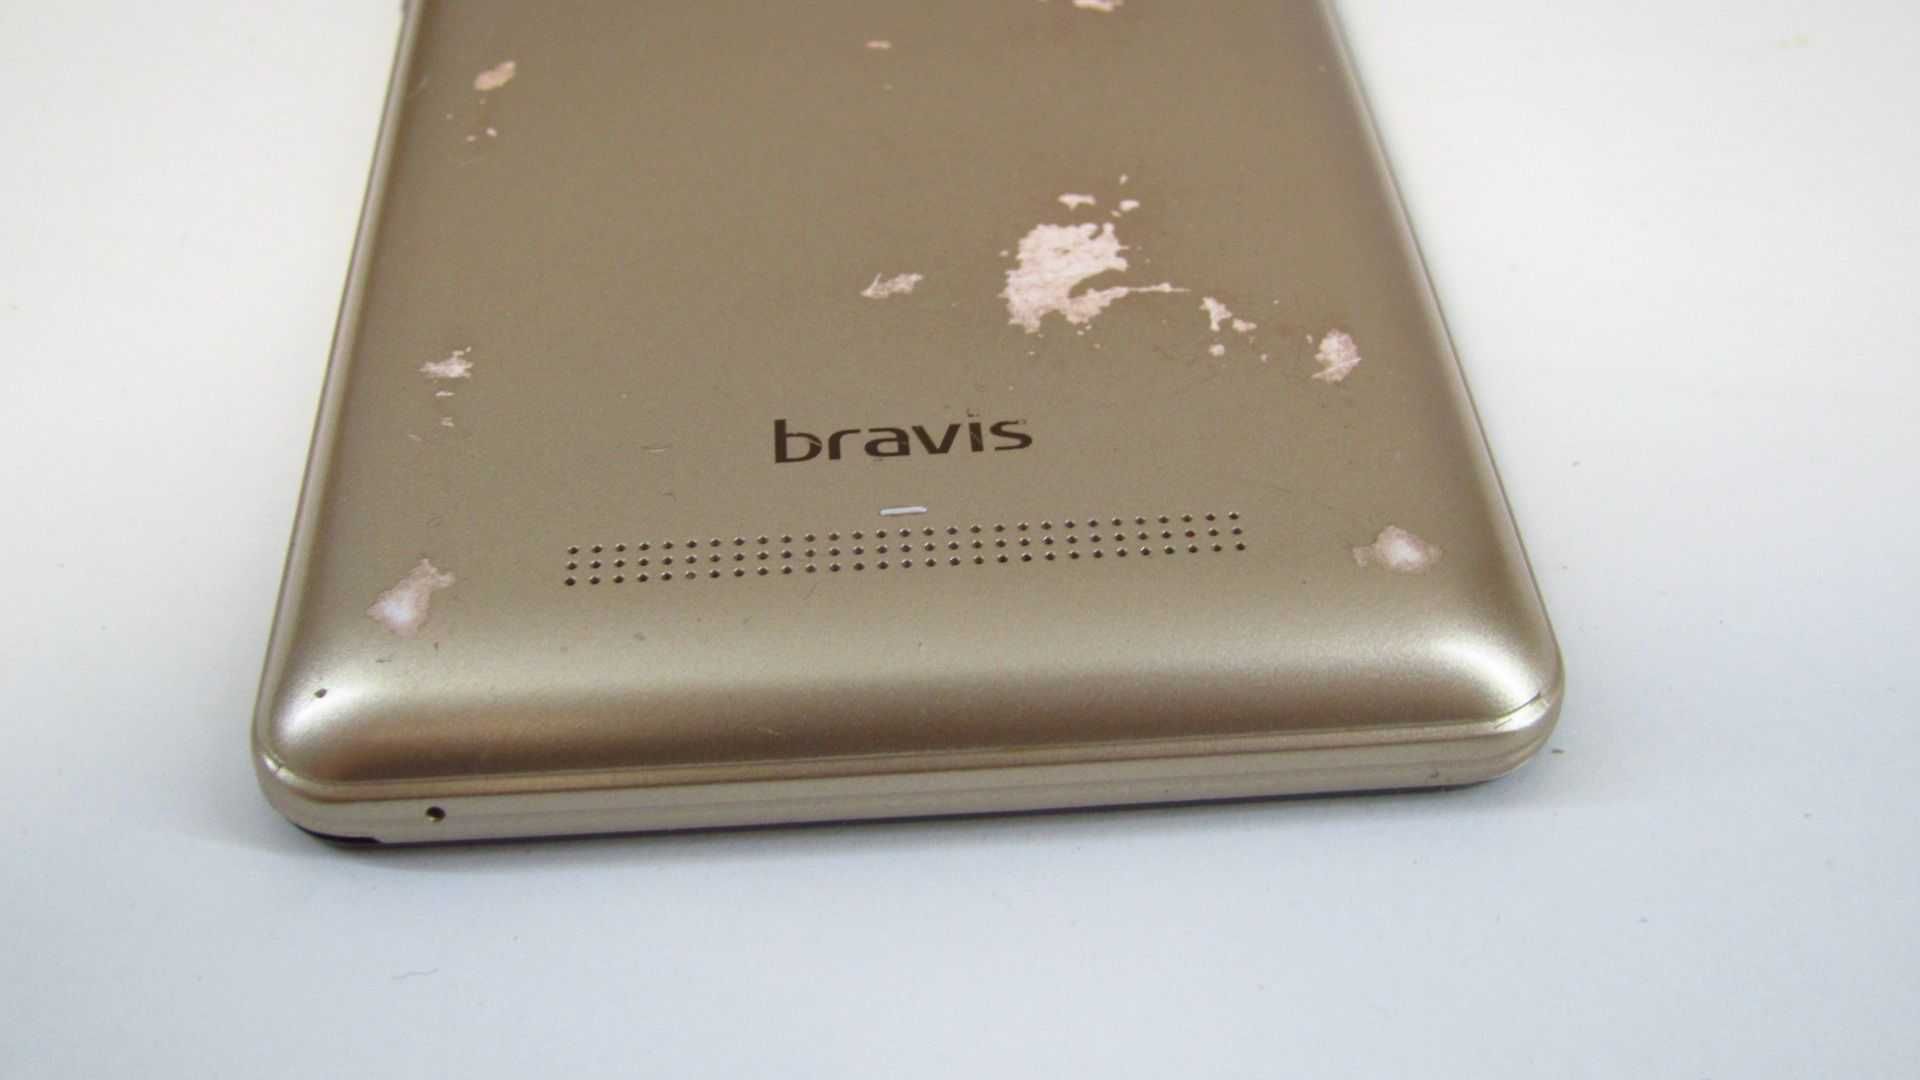 Bravis A512 Harmony Pro Dual Sim Gold 2/16gb